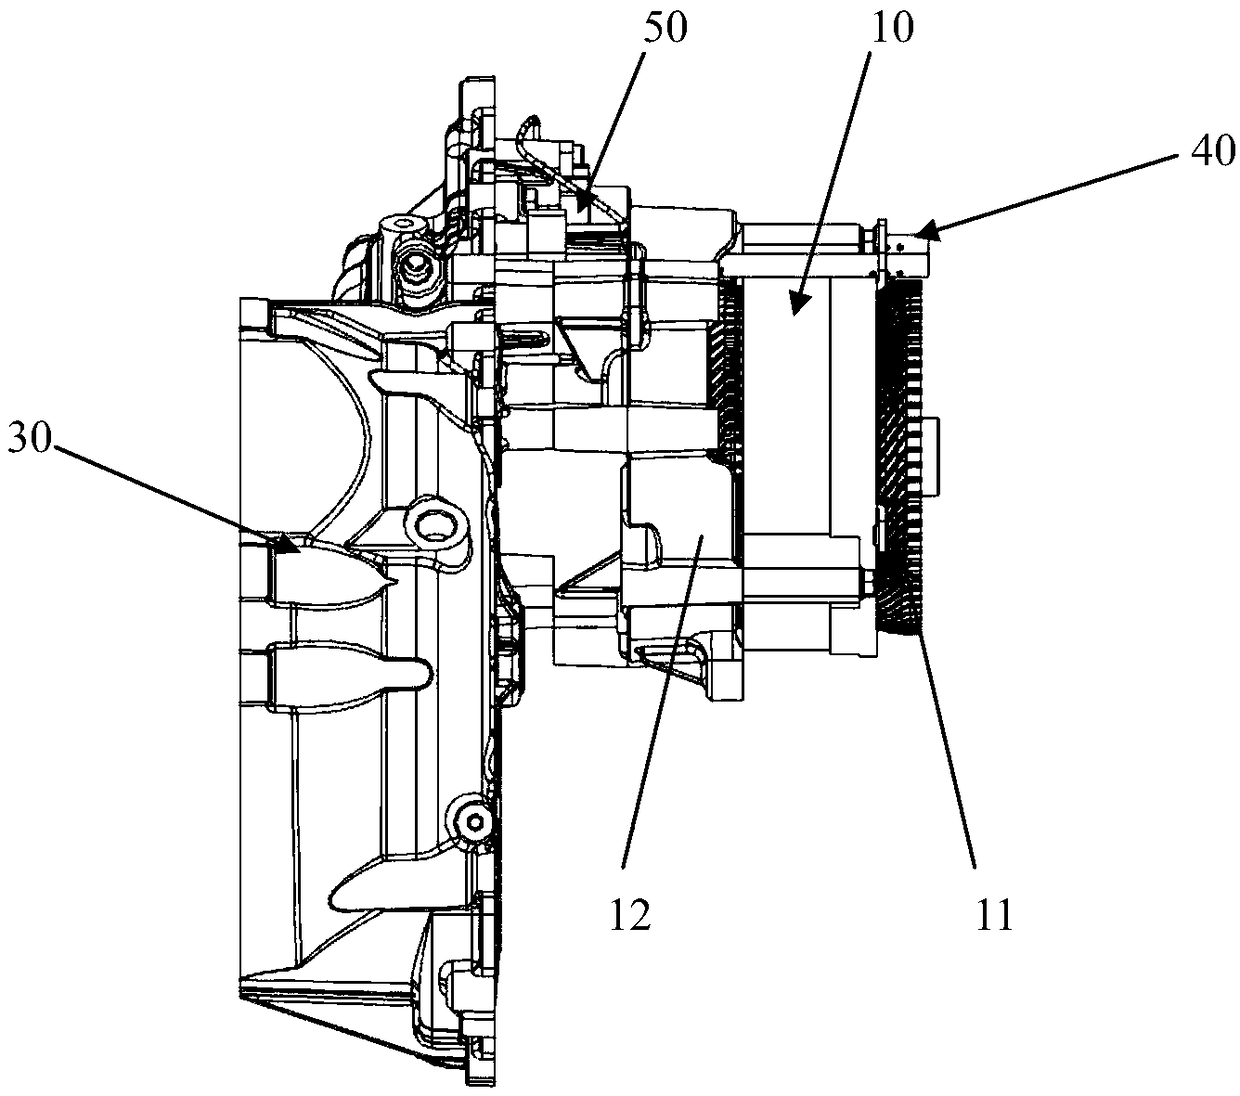 Integrated motor